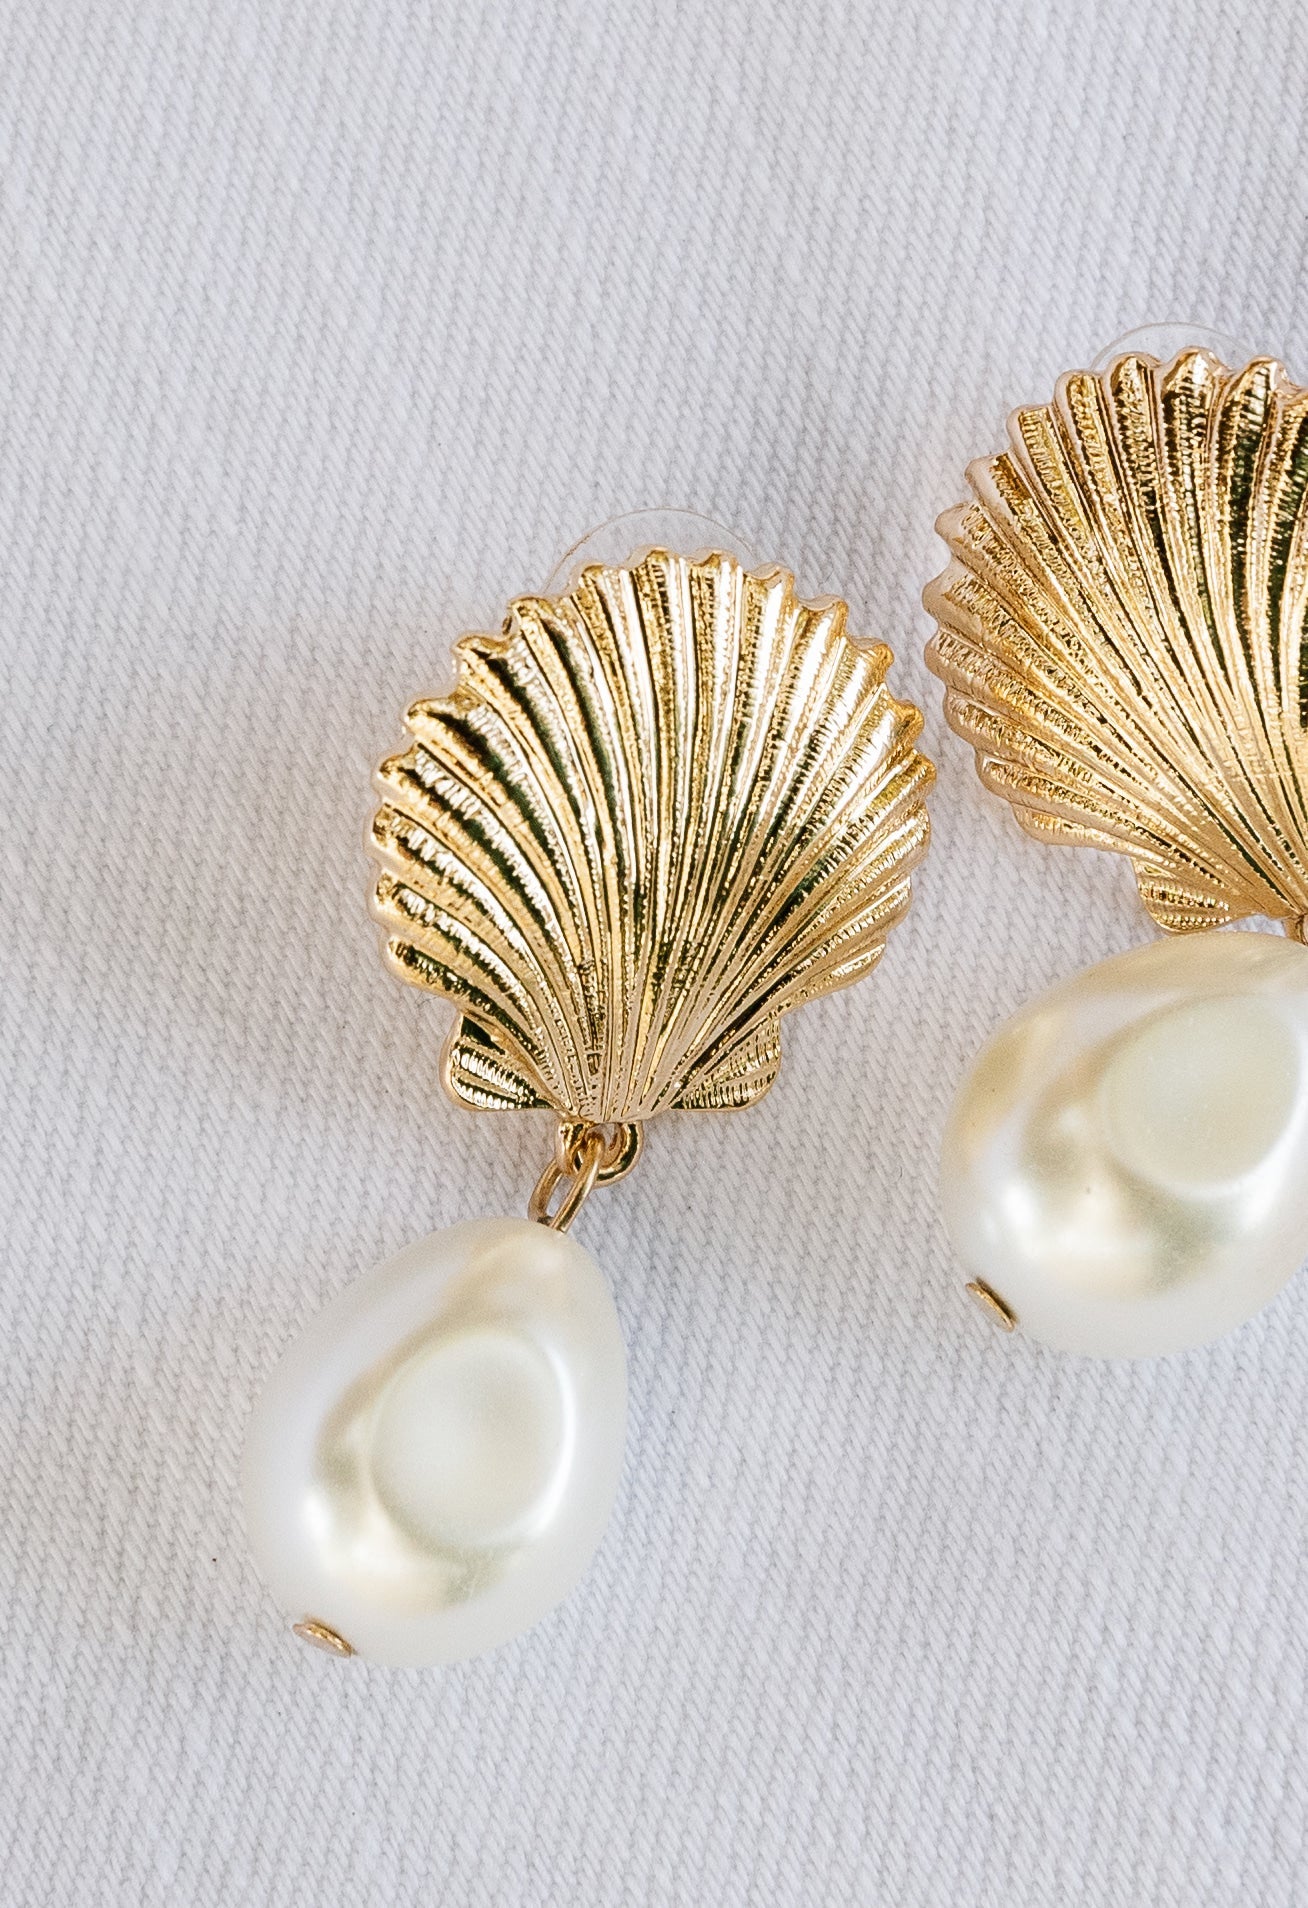 Maren Earrings - GOLD - willows clothing Earrings